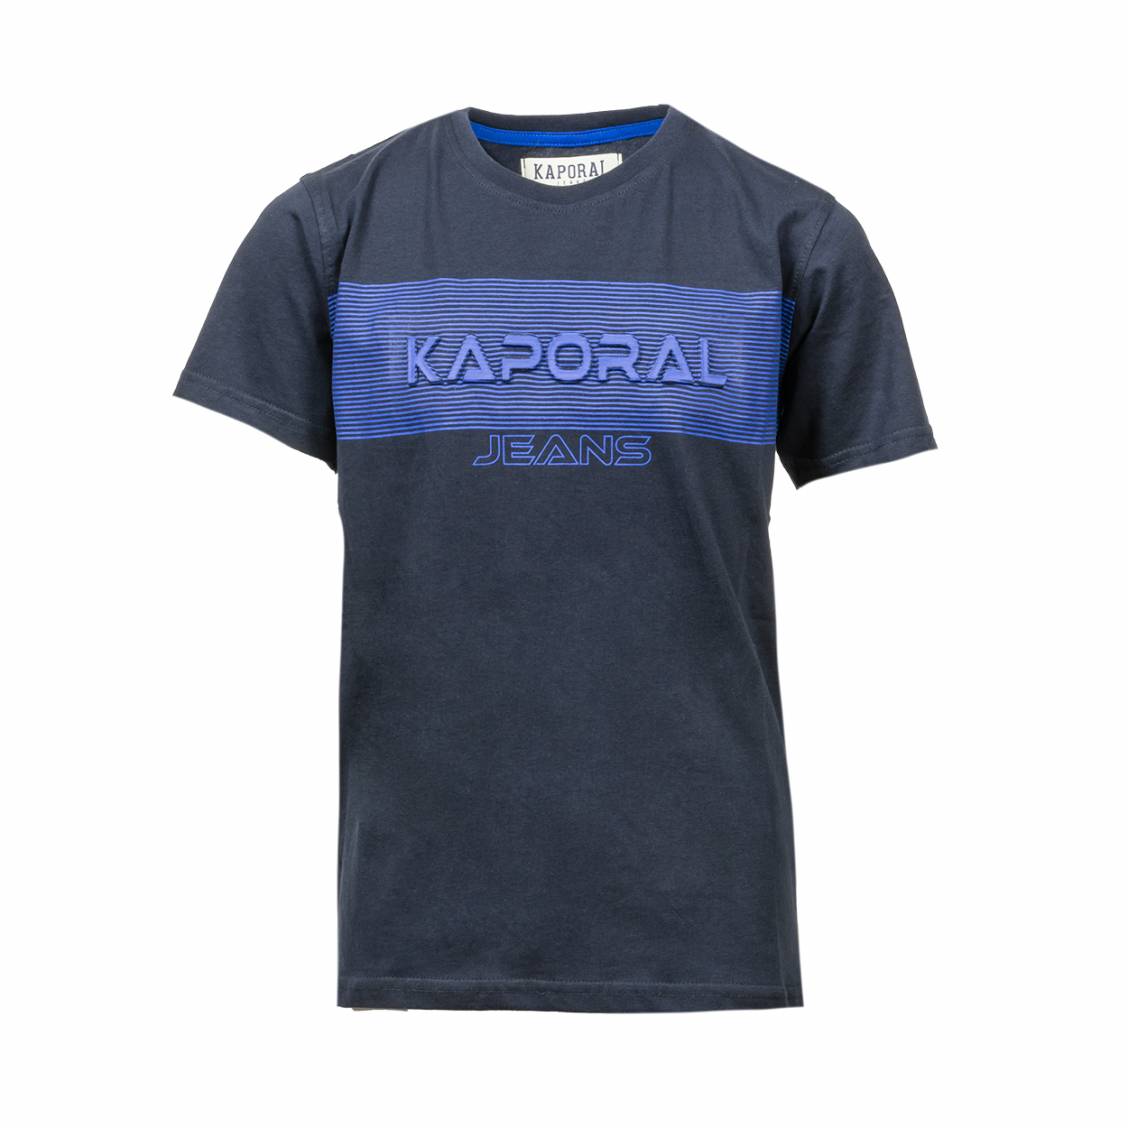 Tee shirt noir Kaporal KAPORAL Junior 